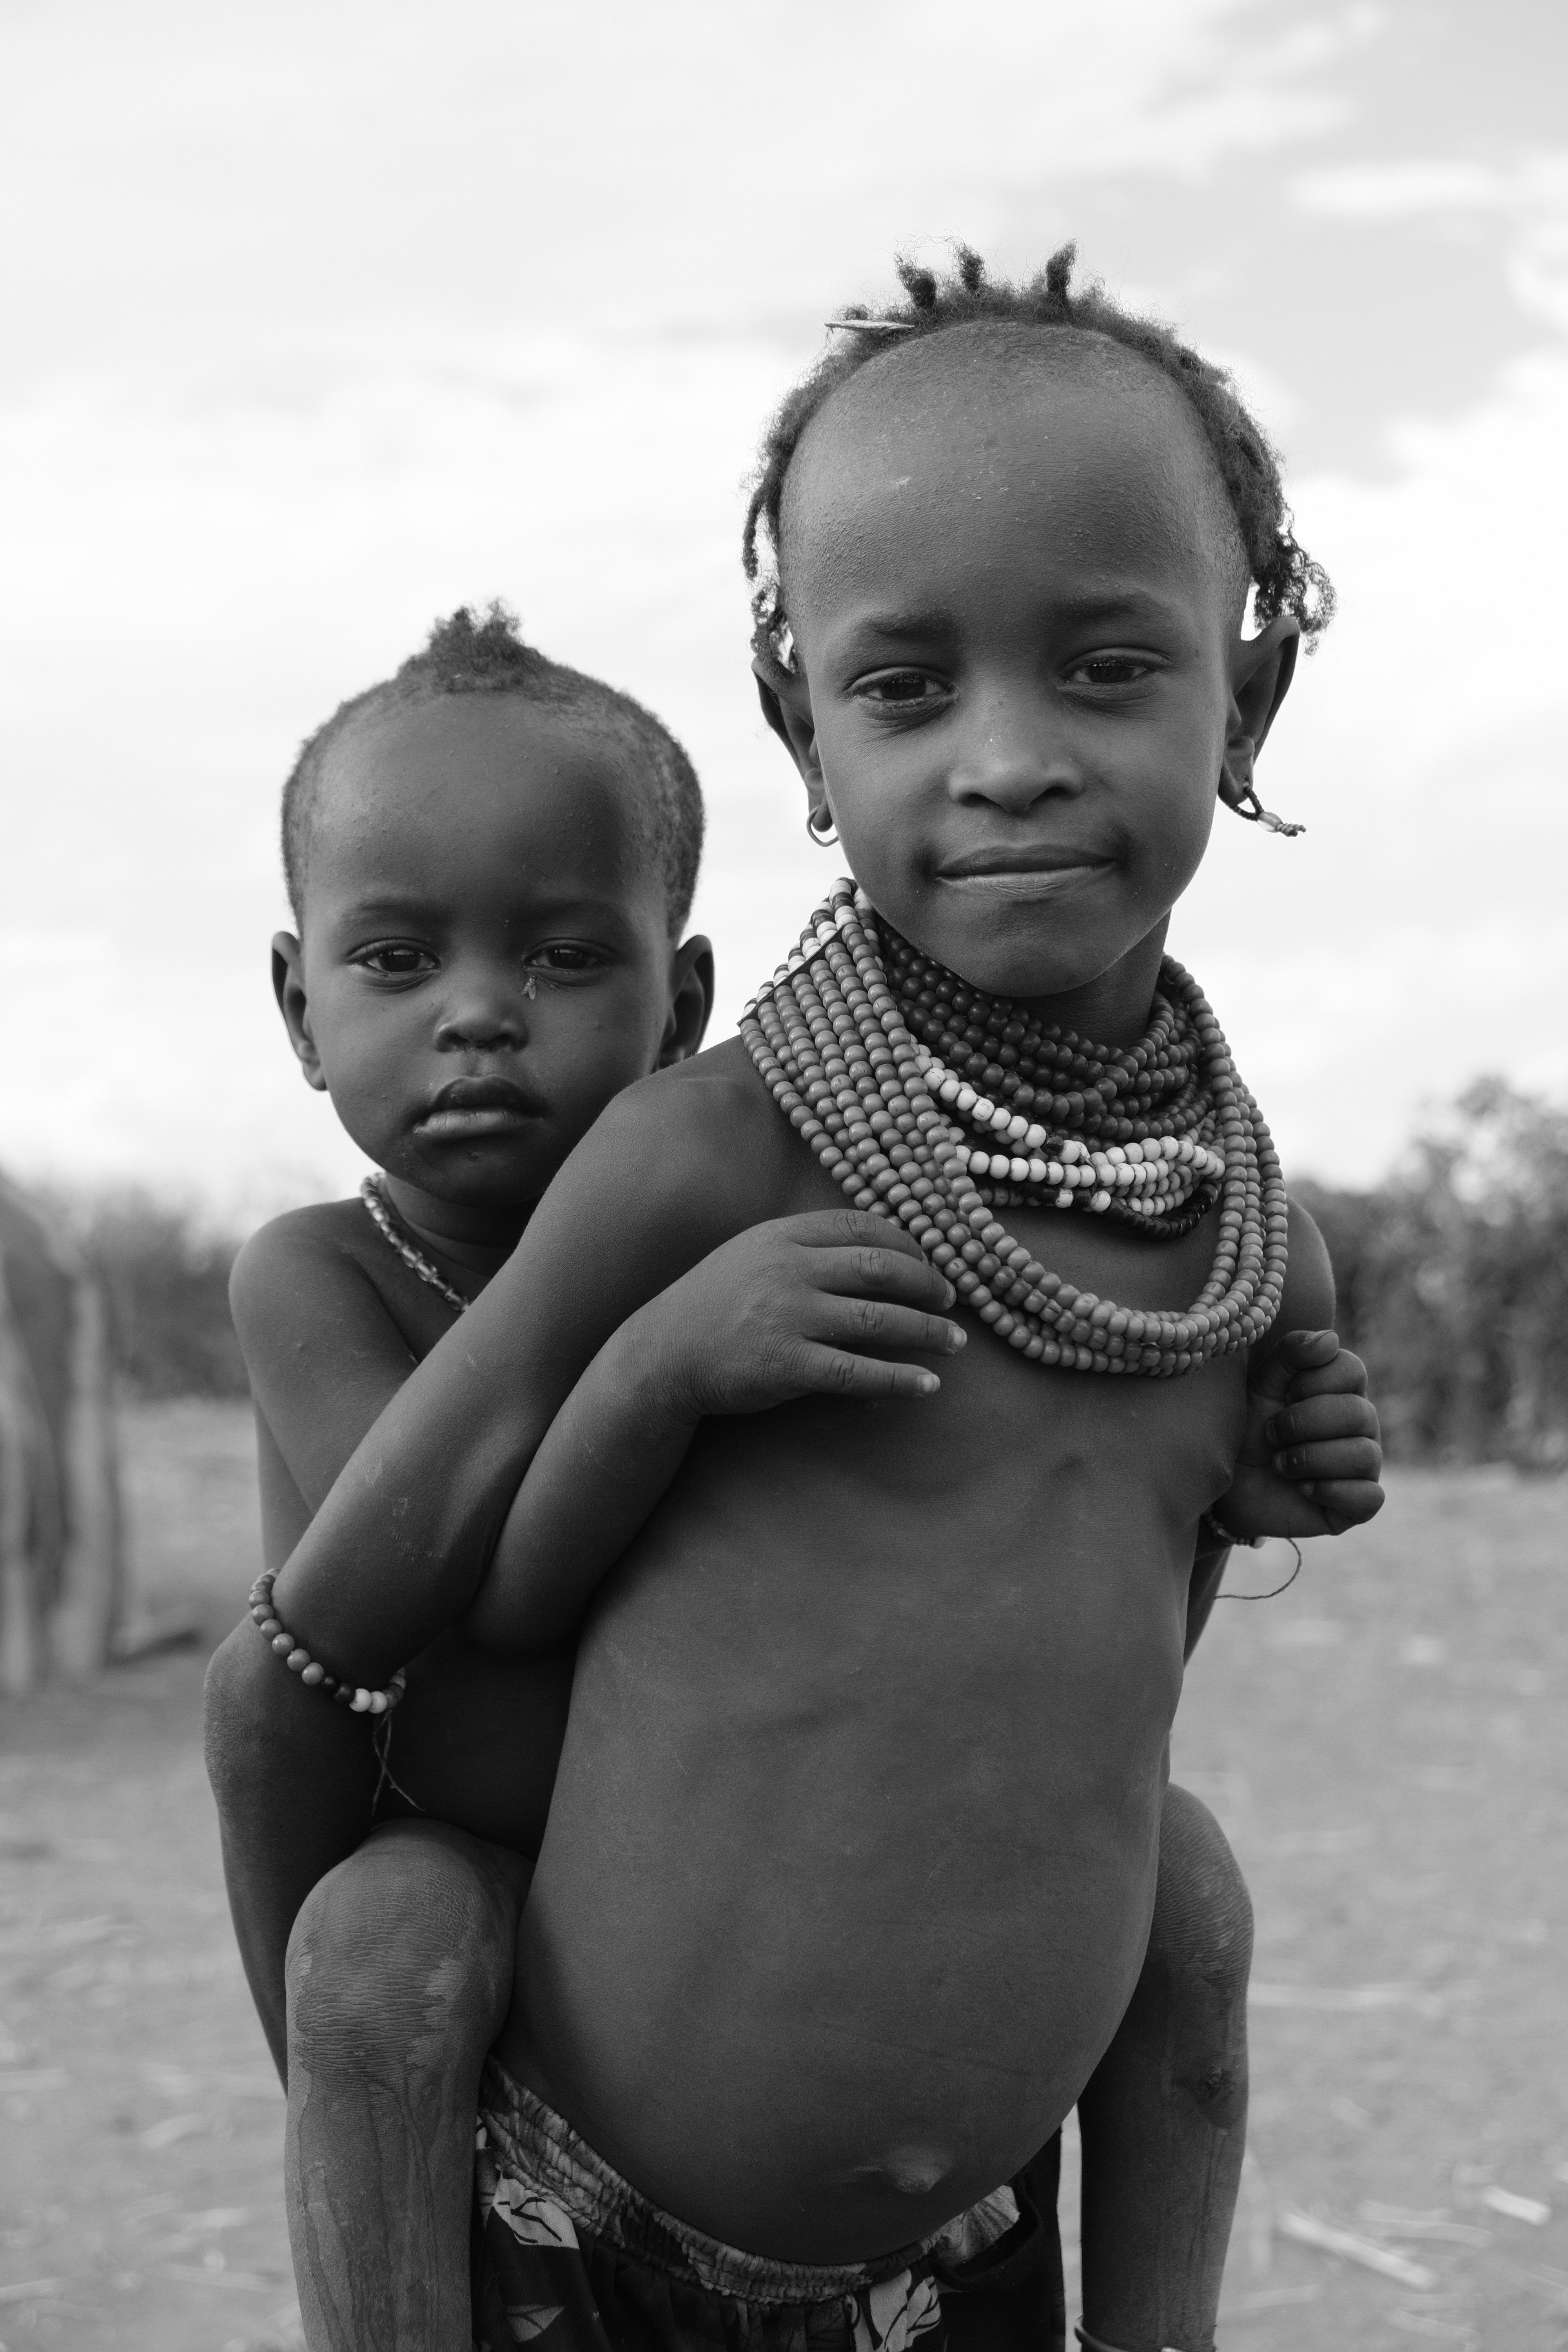 12è premi categoria web: Amore en brazos pequeños · Etiopia. FOTO: Josep Maria Mabres Anter.